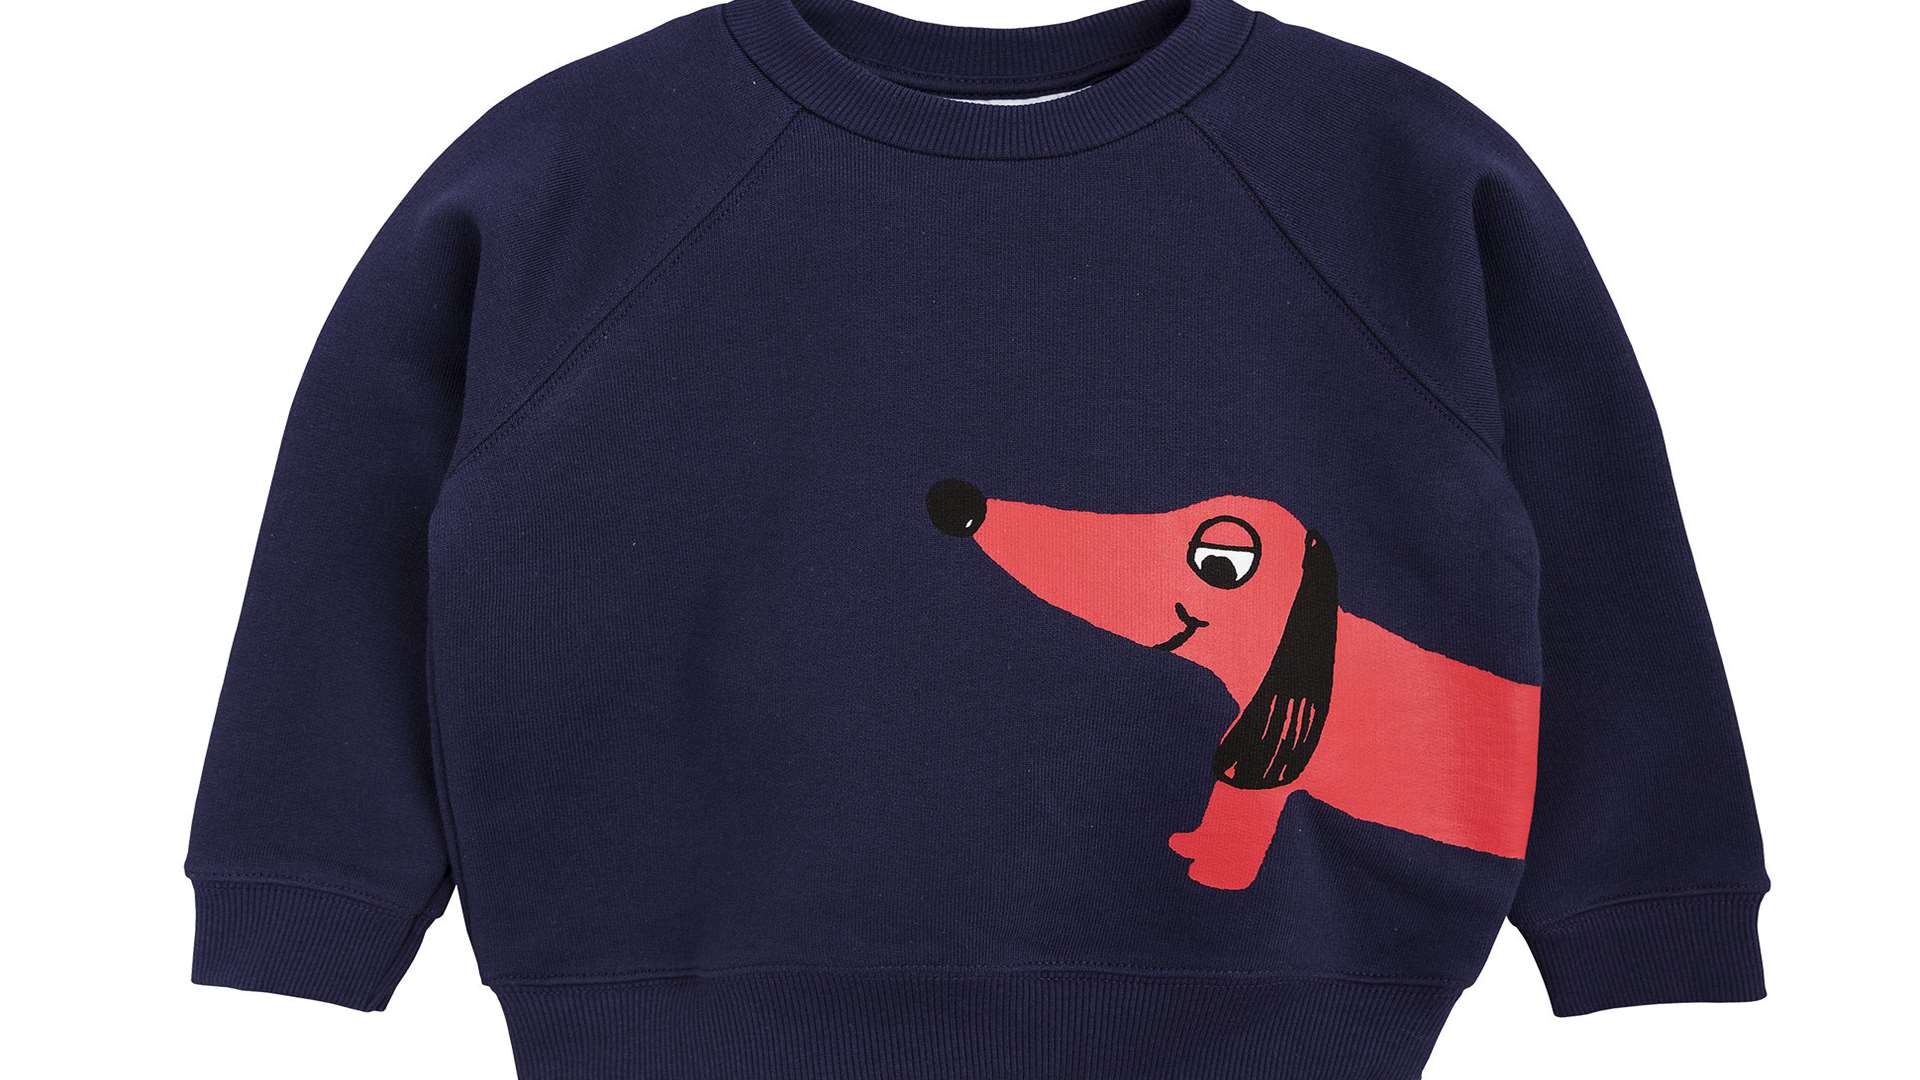 Hot dog sweatshirt from Mini Rodini